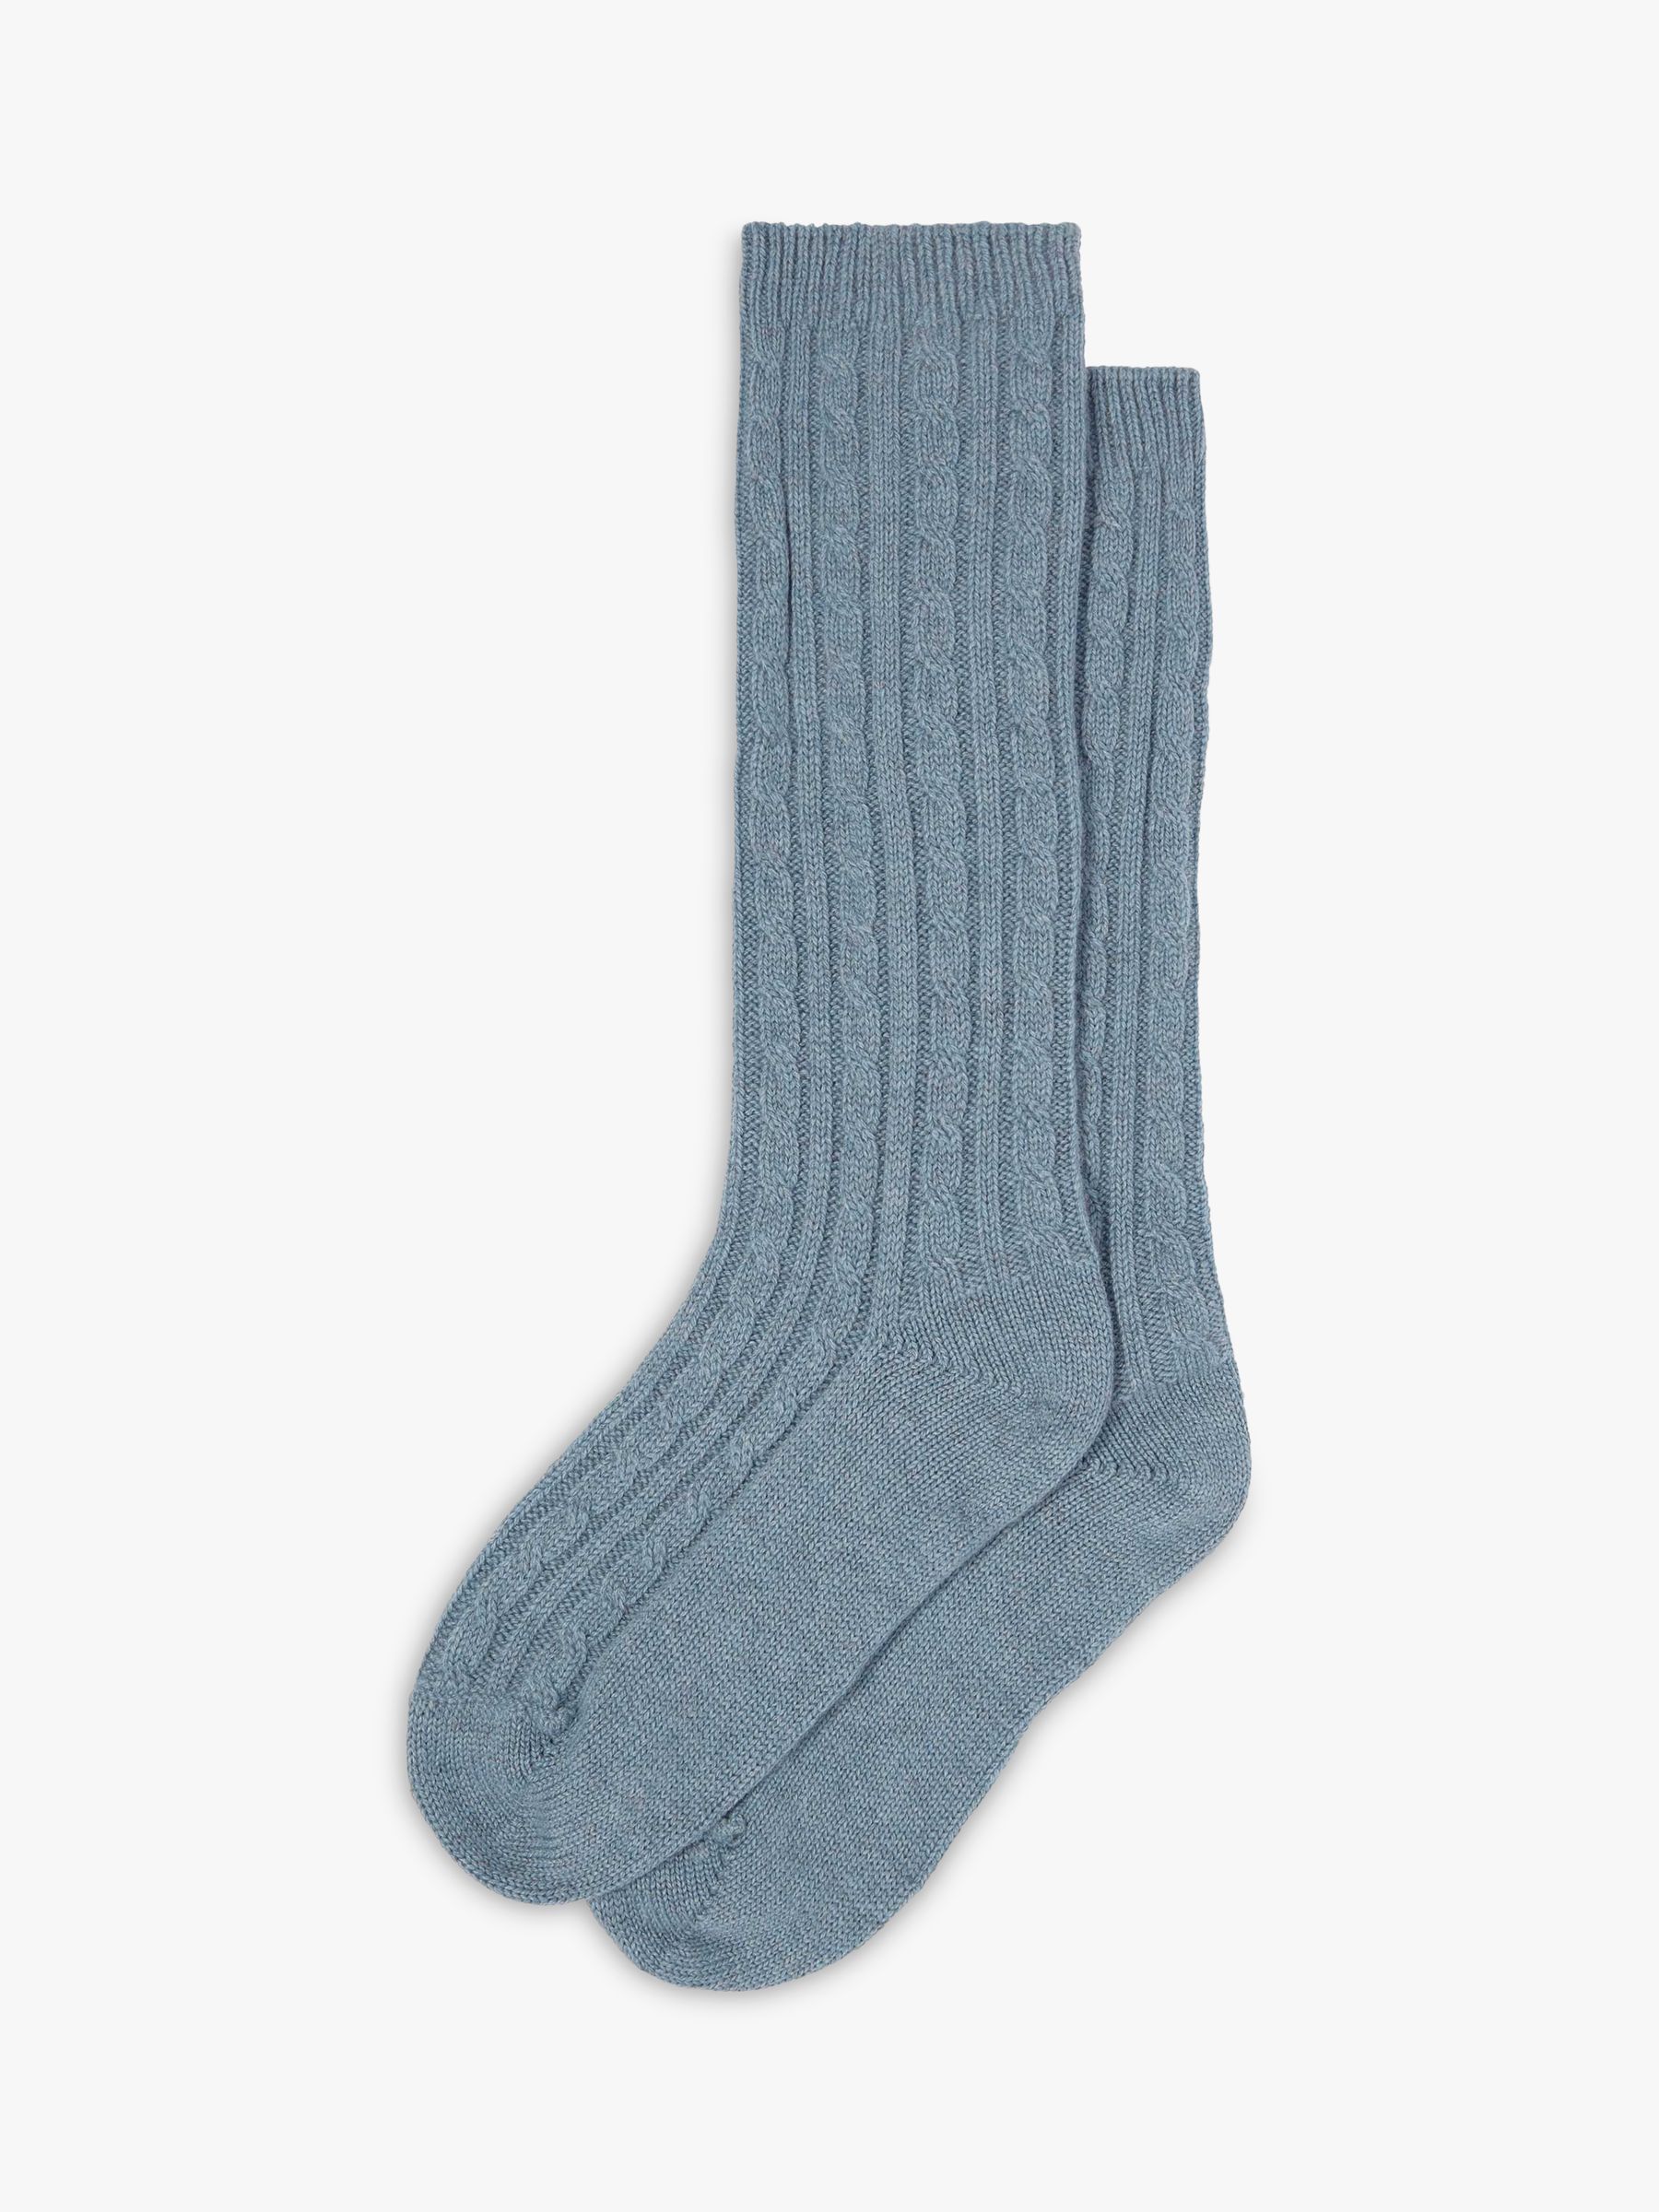 Brora Cashmere Bed Socks, Mist at John Lewis & Partners